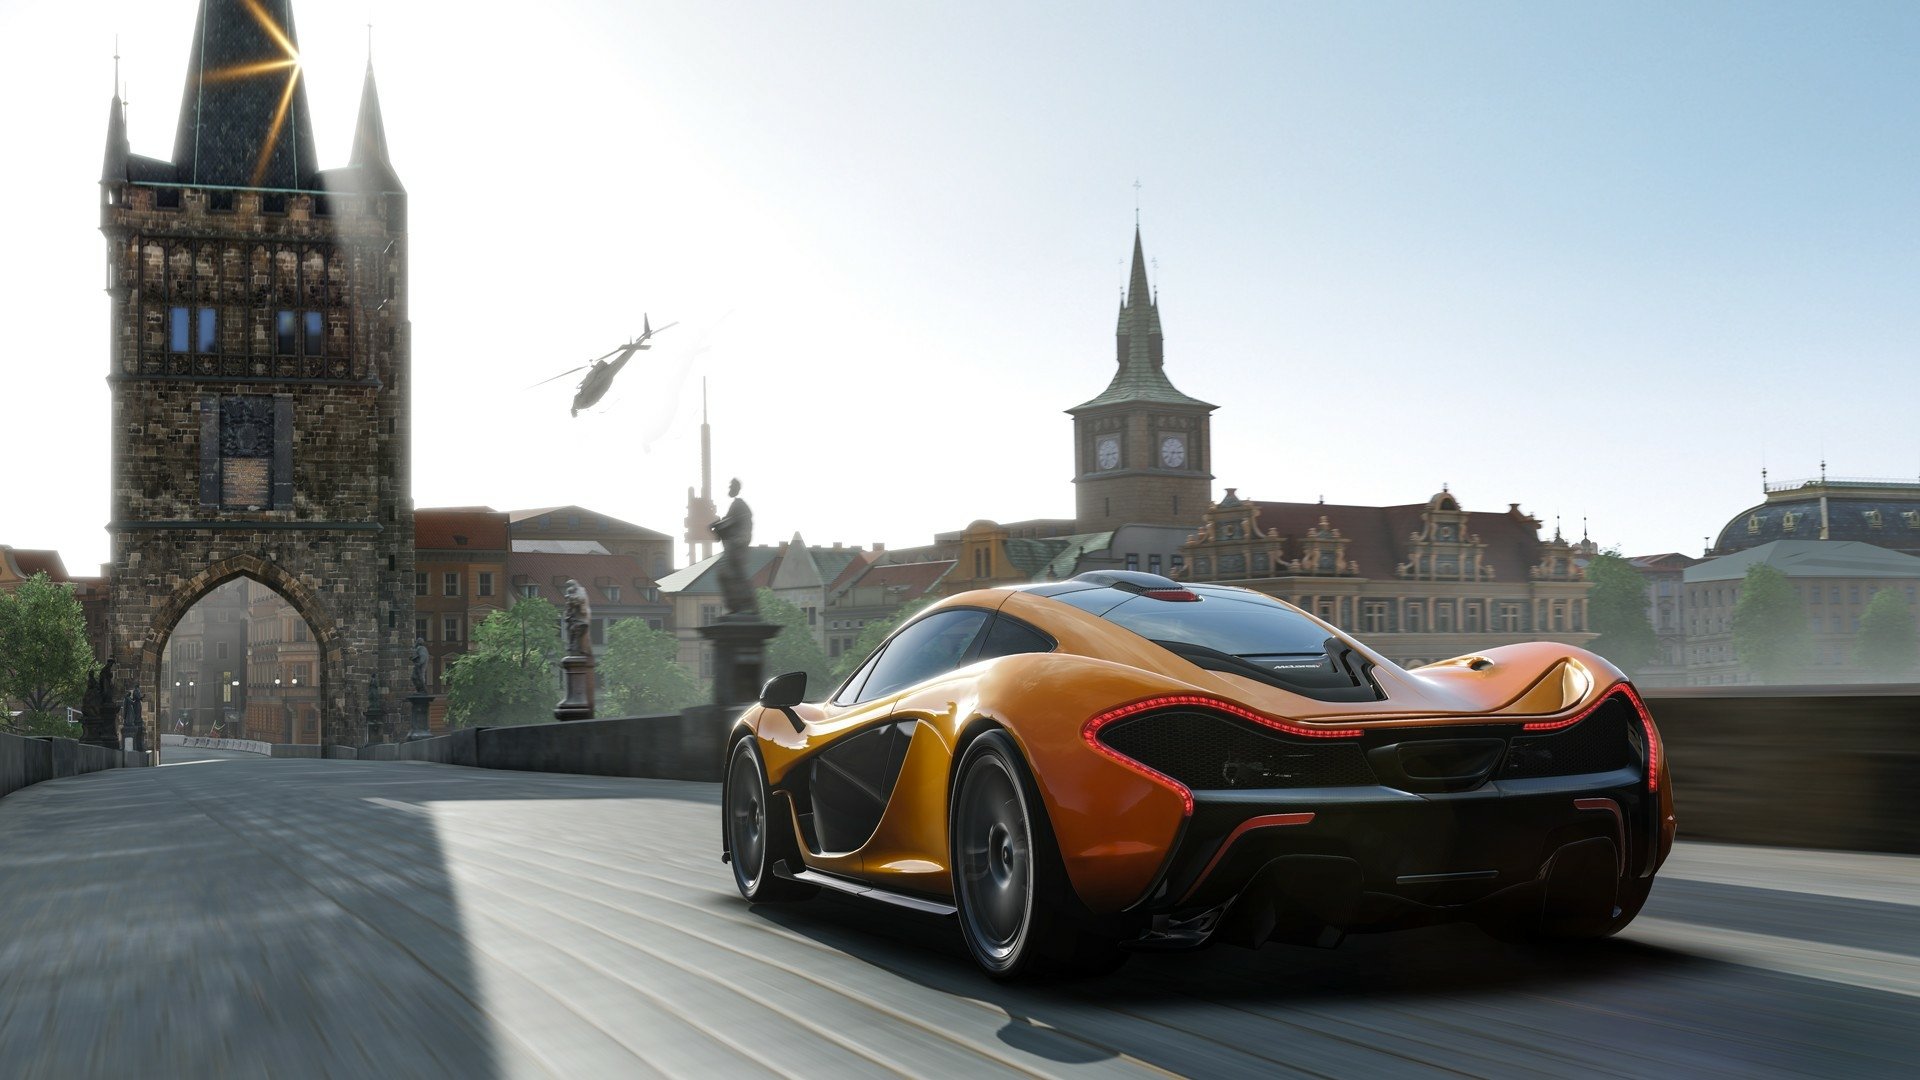 Forza Motorsport 5 wallpapers or desktop backgrounds